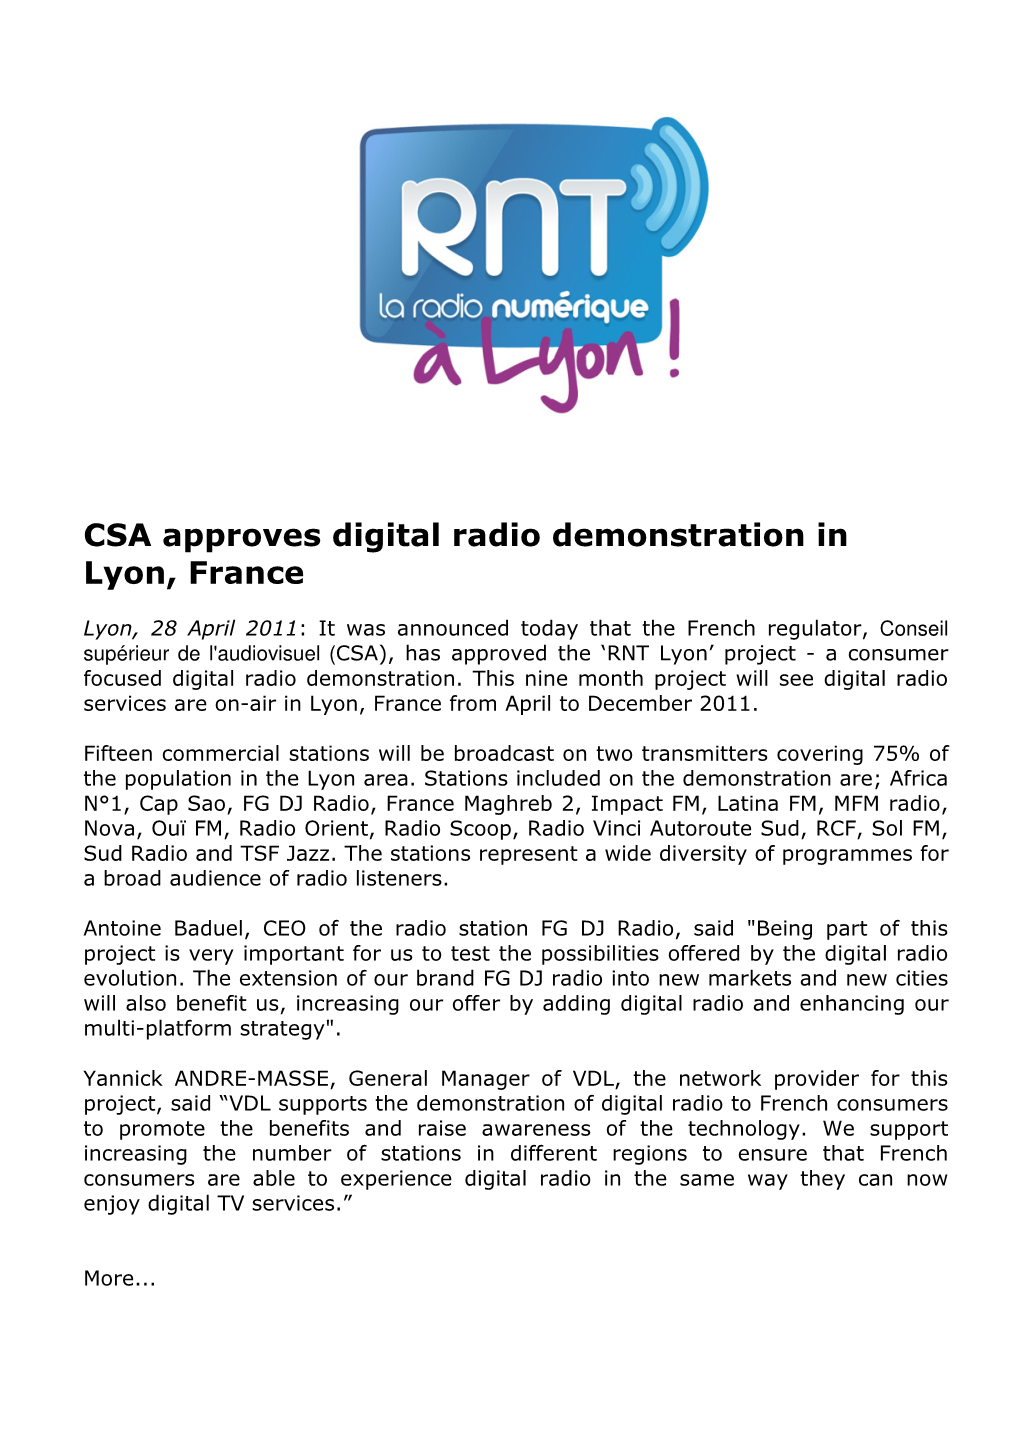 CSA Approves Digital Radio Demonstration in Lyon, France